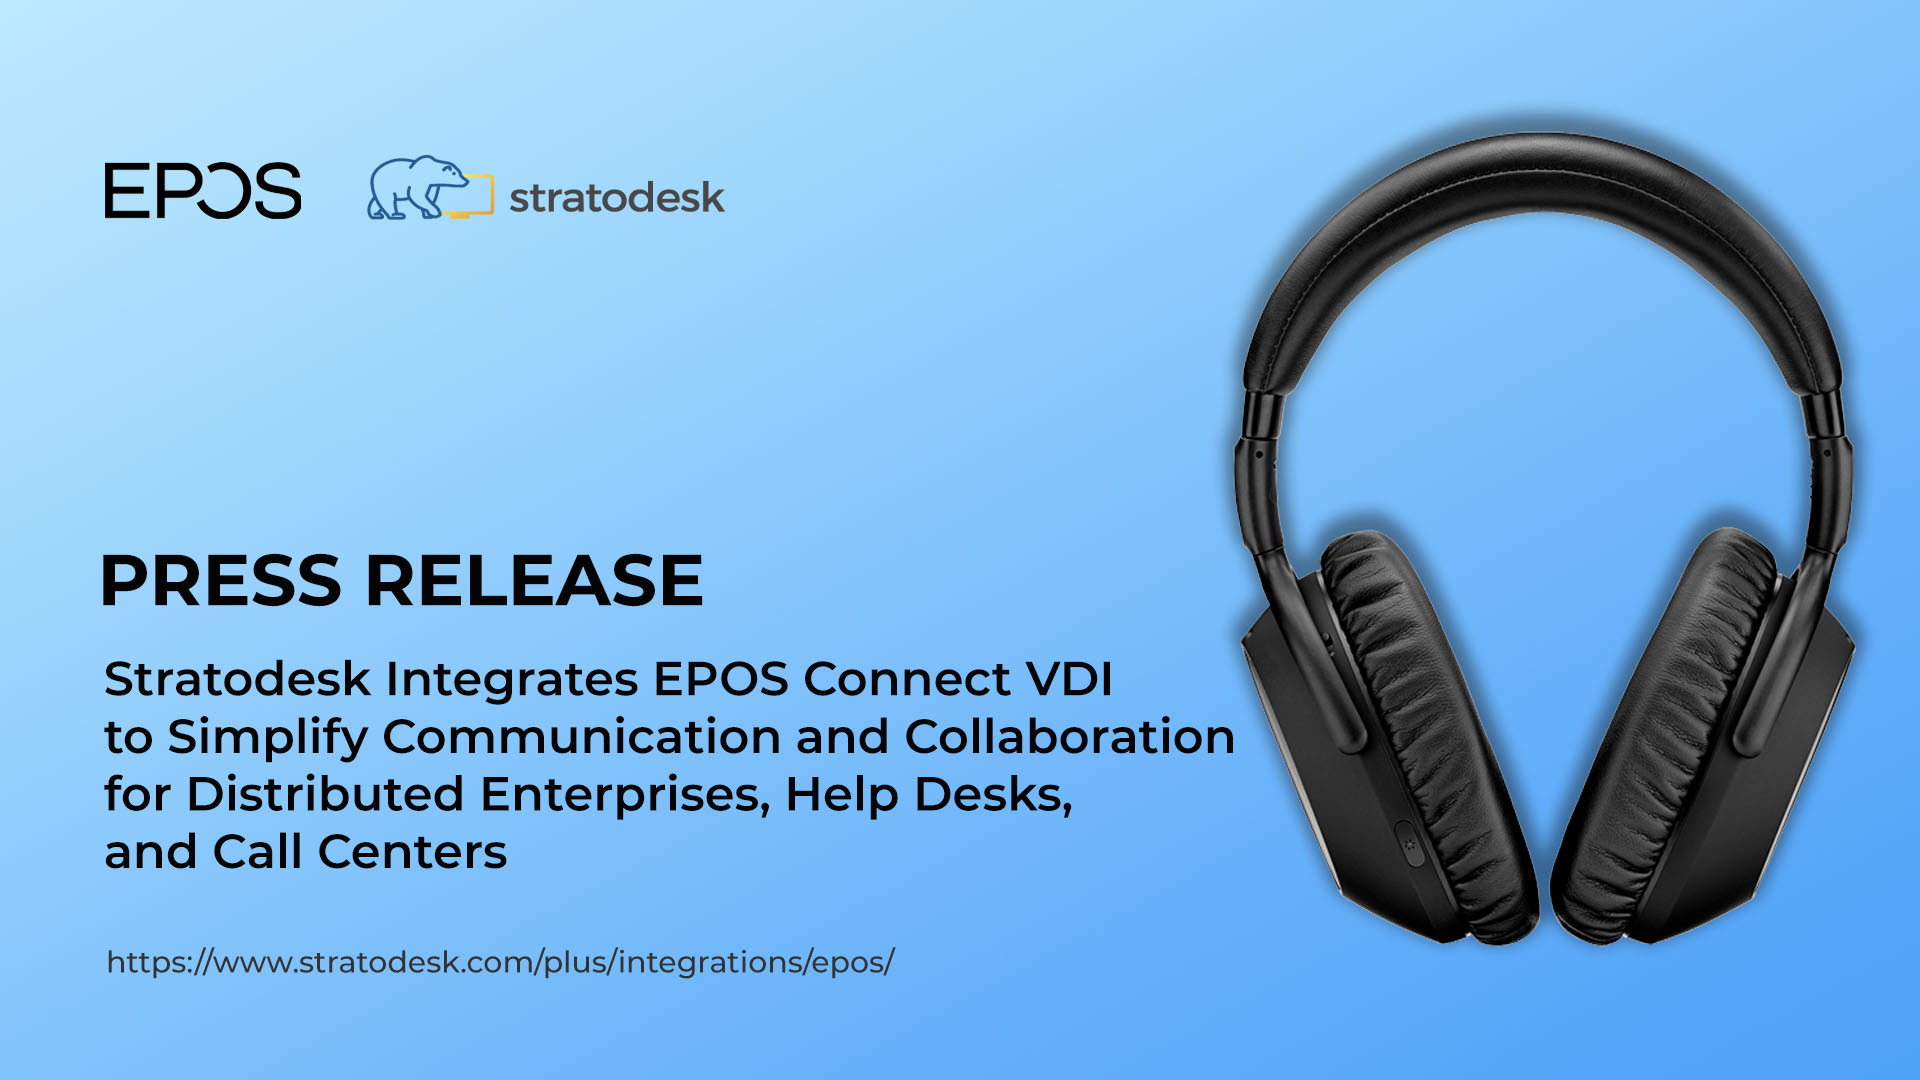 Stratodesk EPOS Press Release Image with headphone